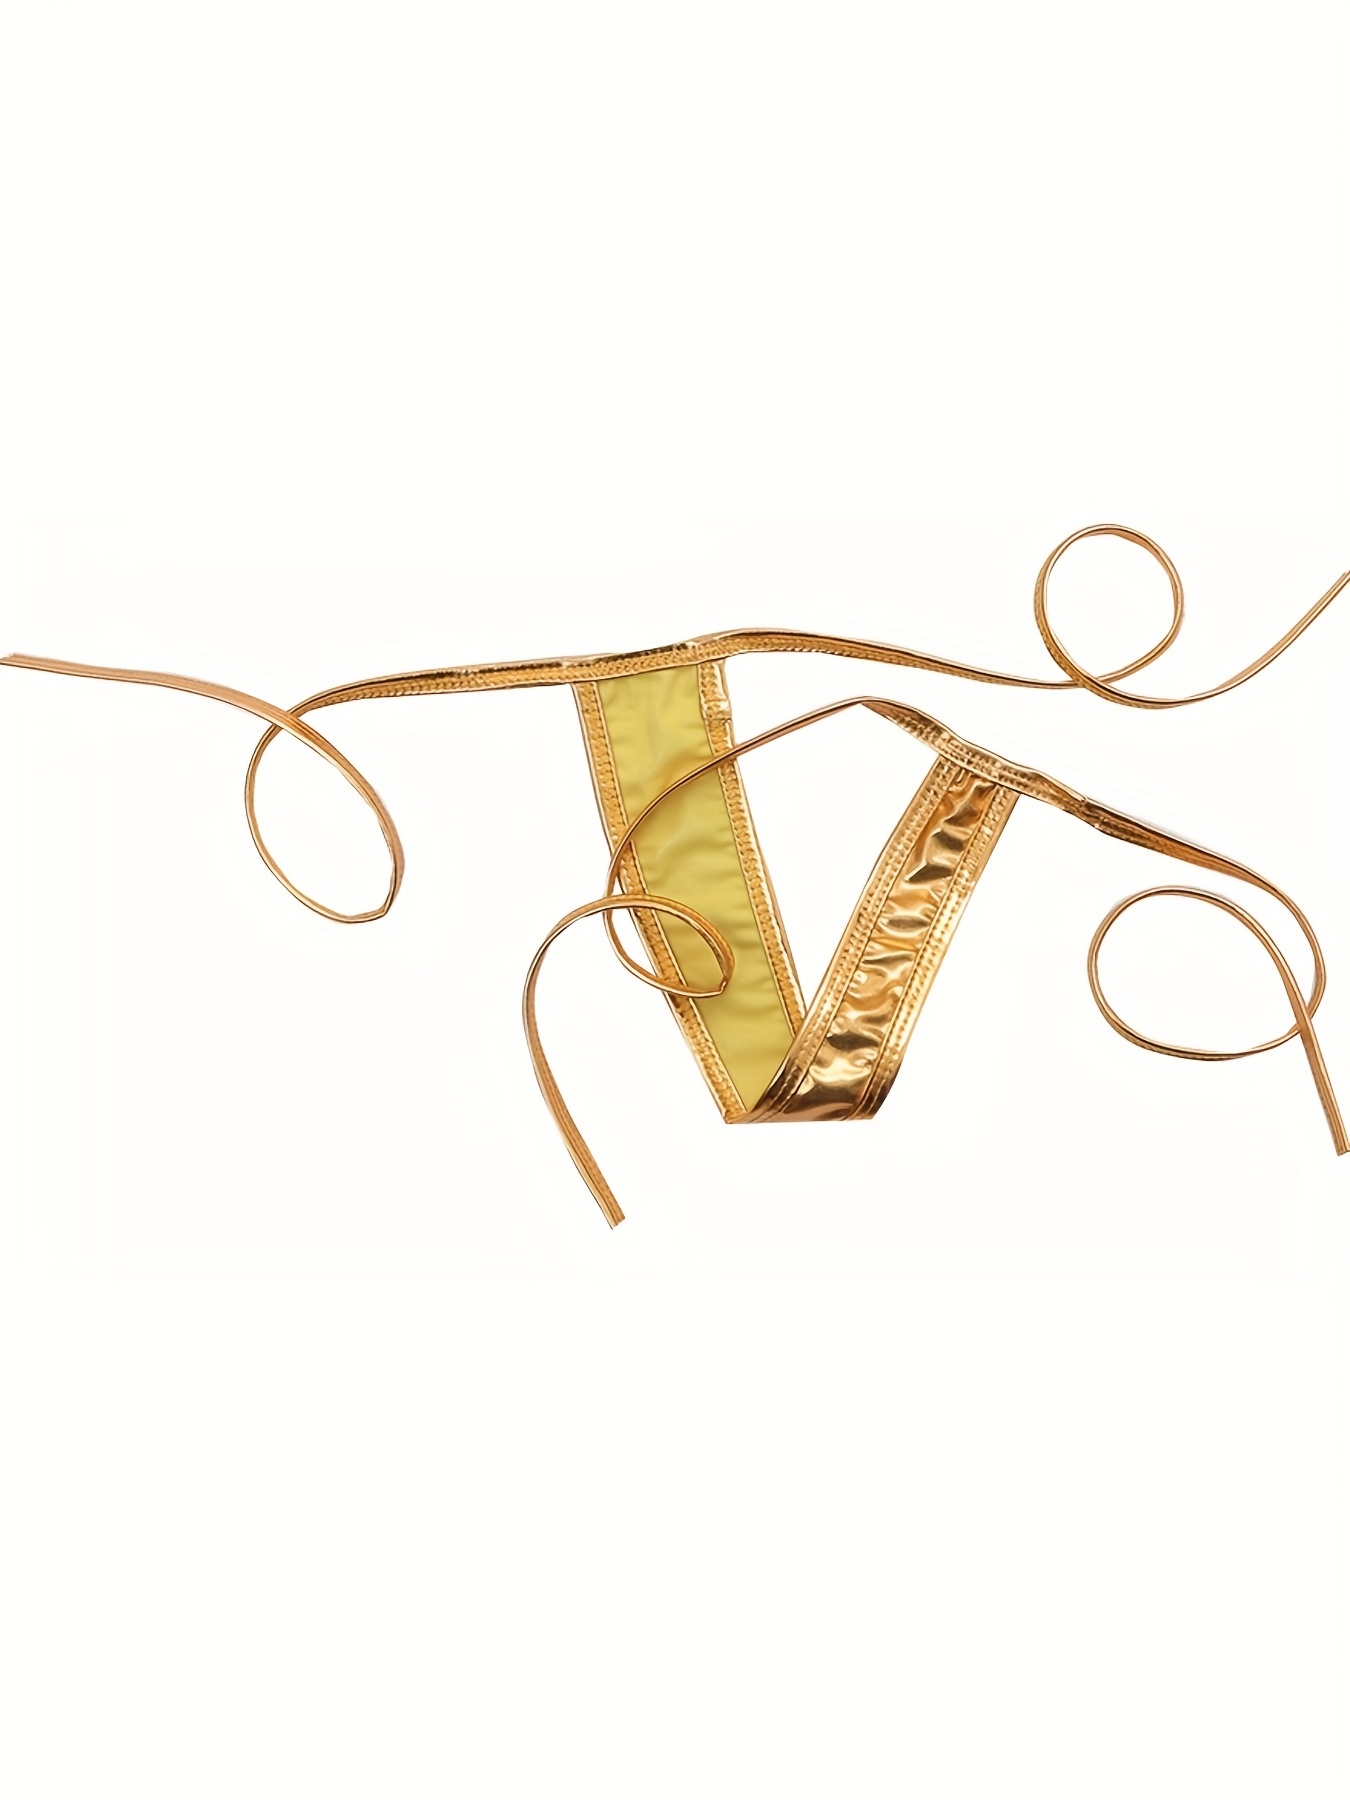 SHENGXINY Women's Lace Halter Lingerie Sexy Bras and Panty Set